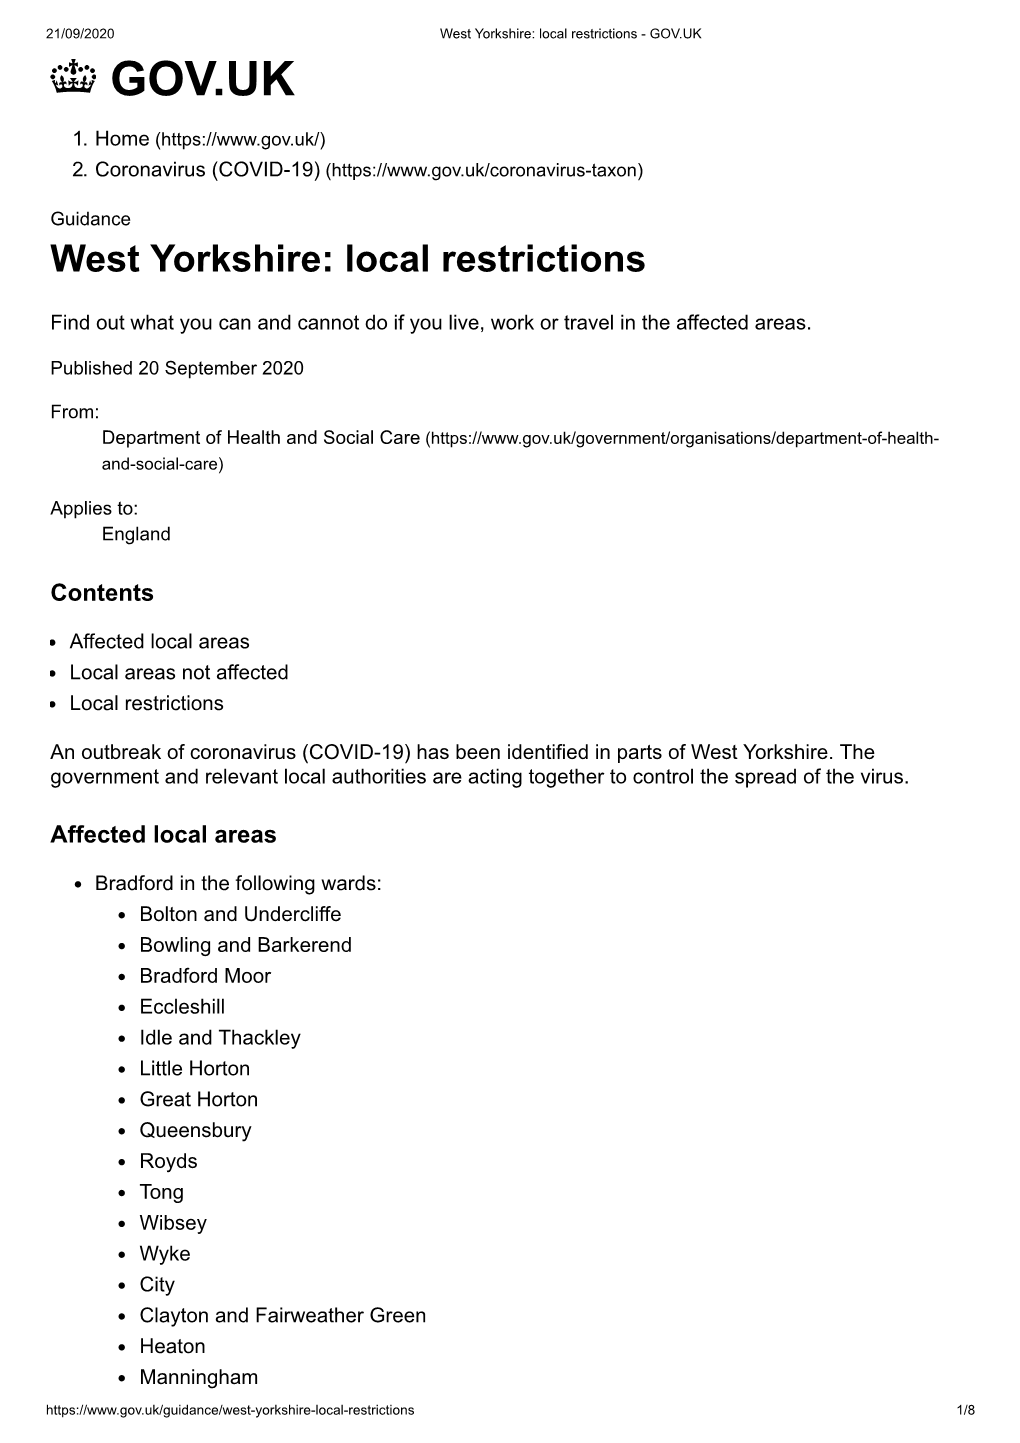 West Yorkshire: Local Restrictions - GOV.UK GOV.UK